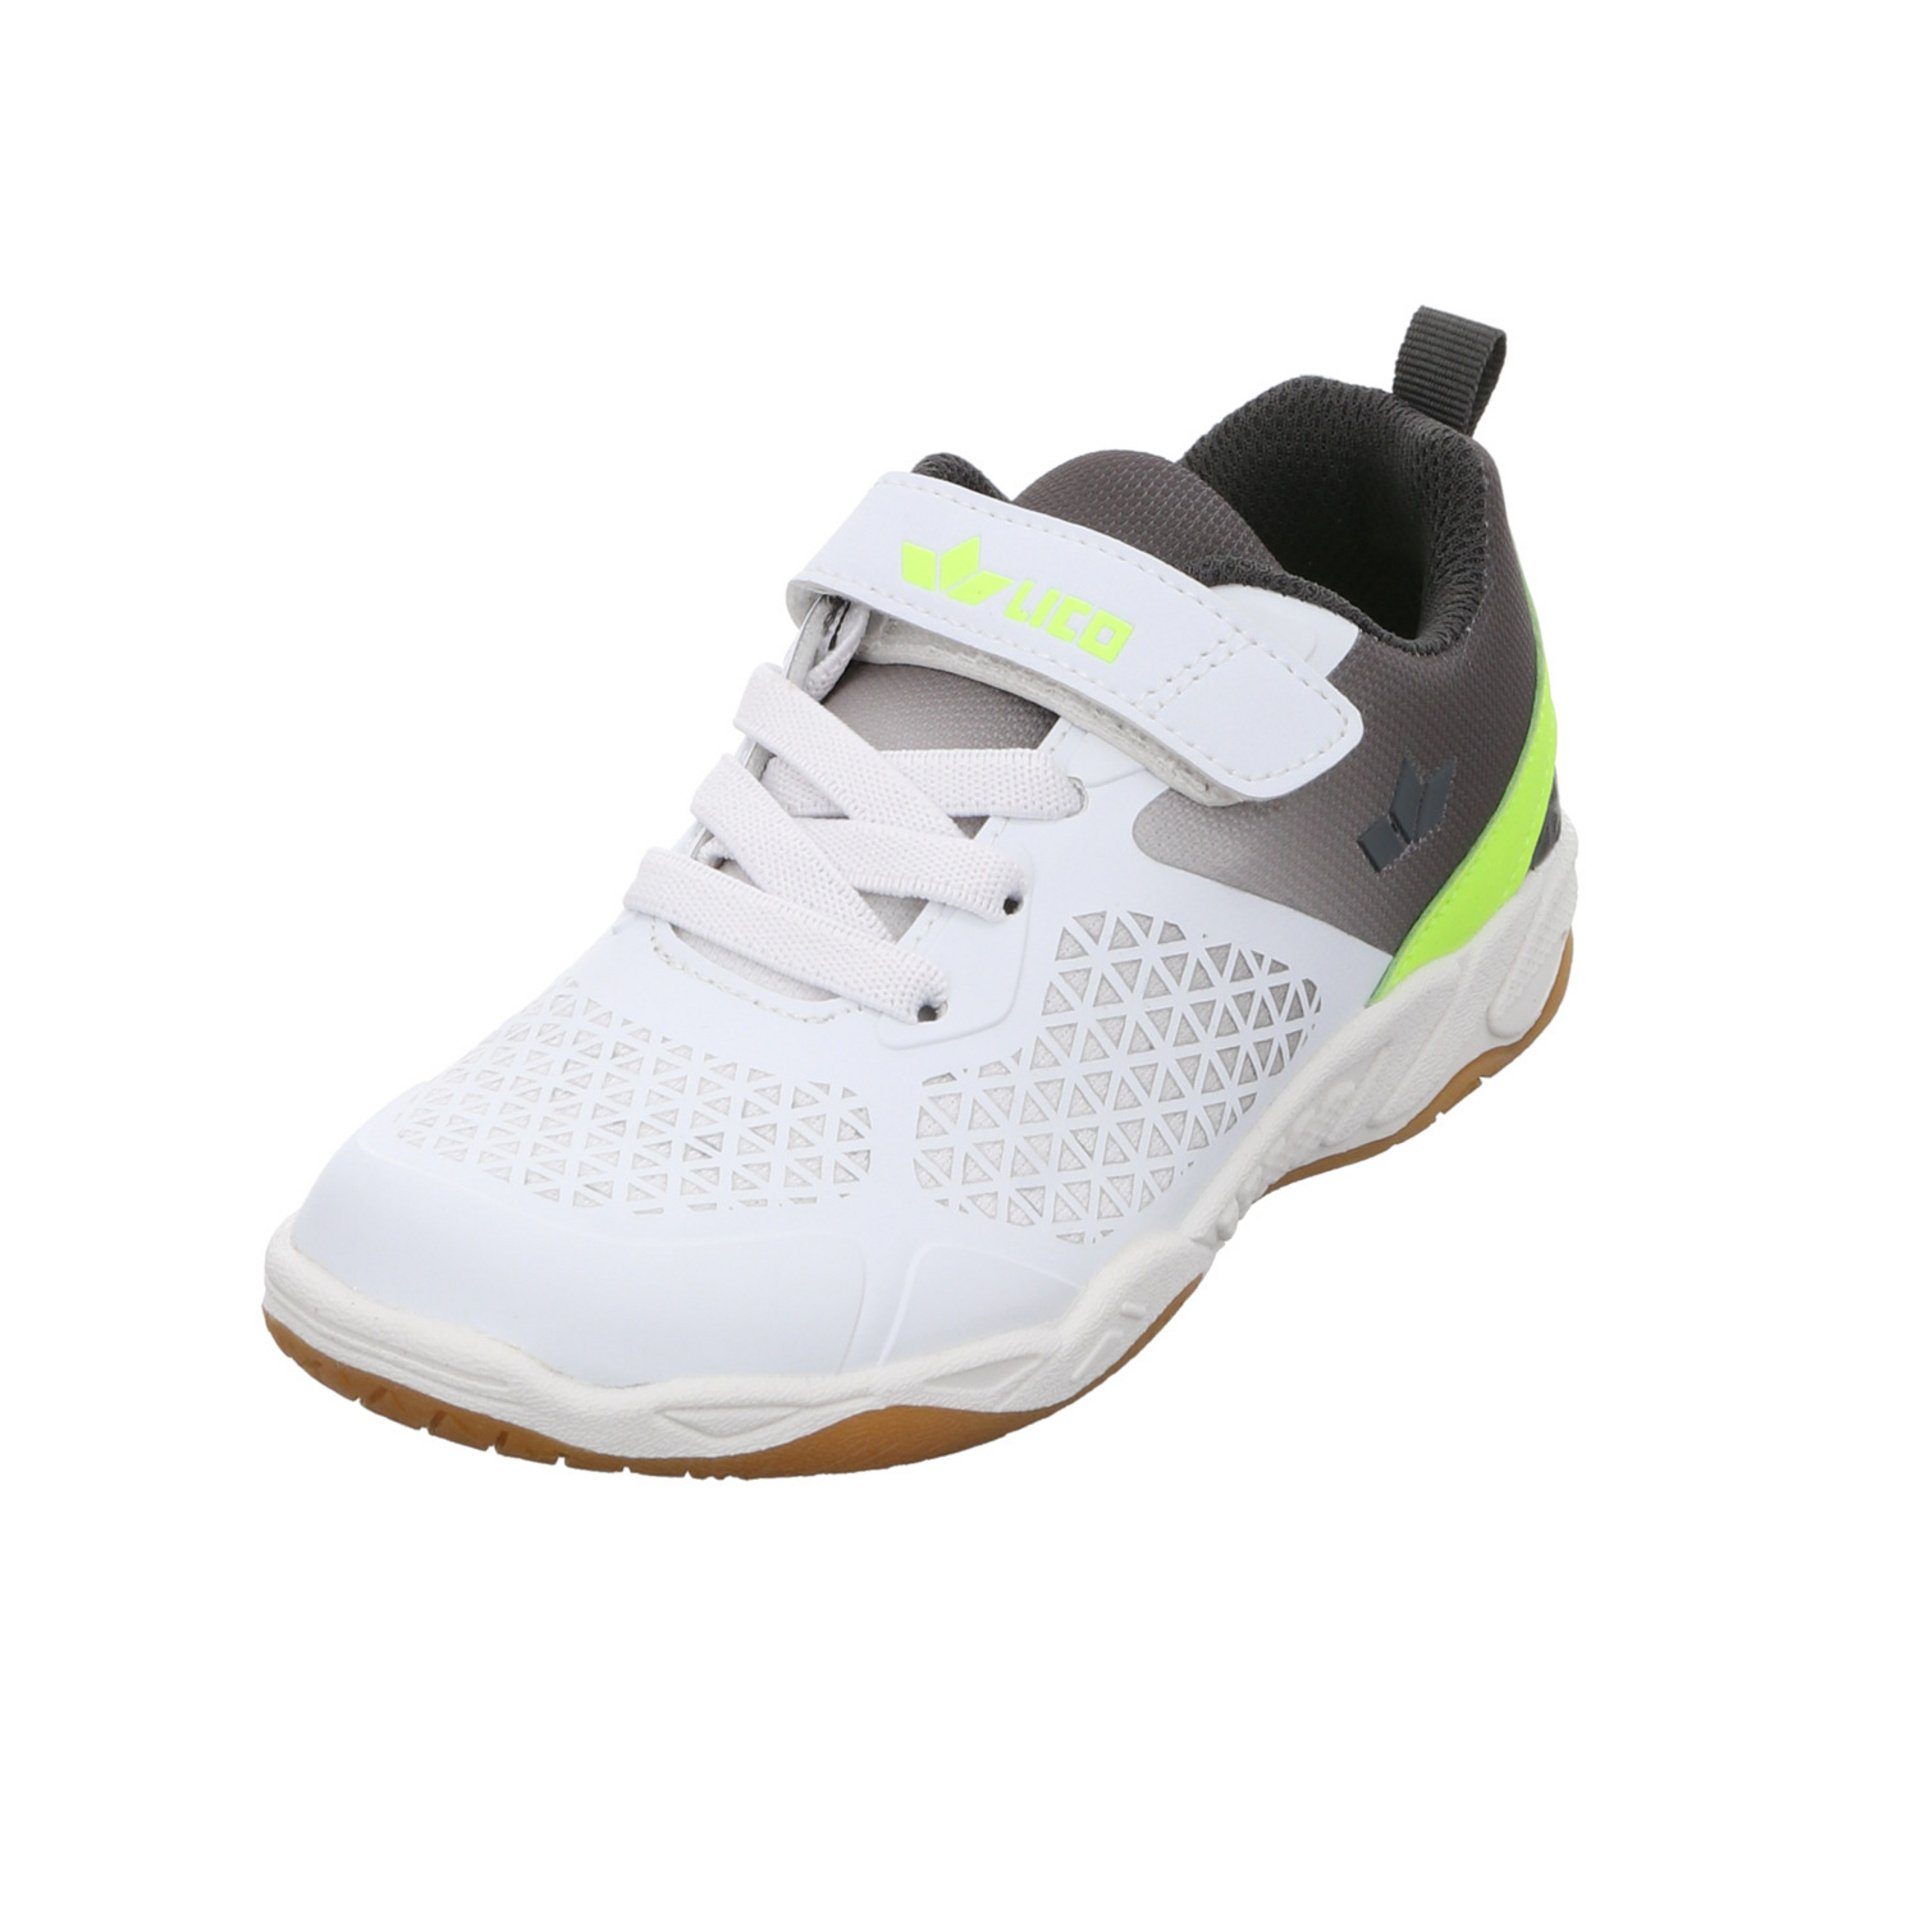 Lico Kit VS Sneaker Synthetikkombination gemustert Sneaker Synthetikkombination weiss/grau/lemon